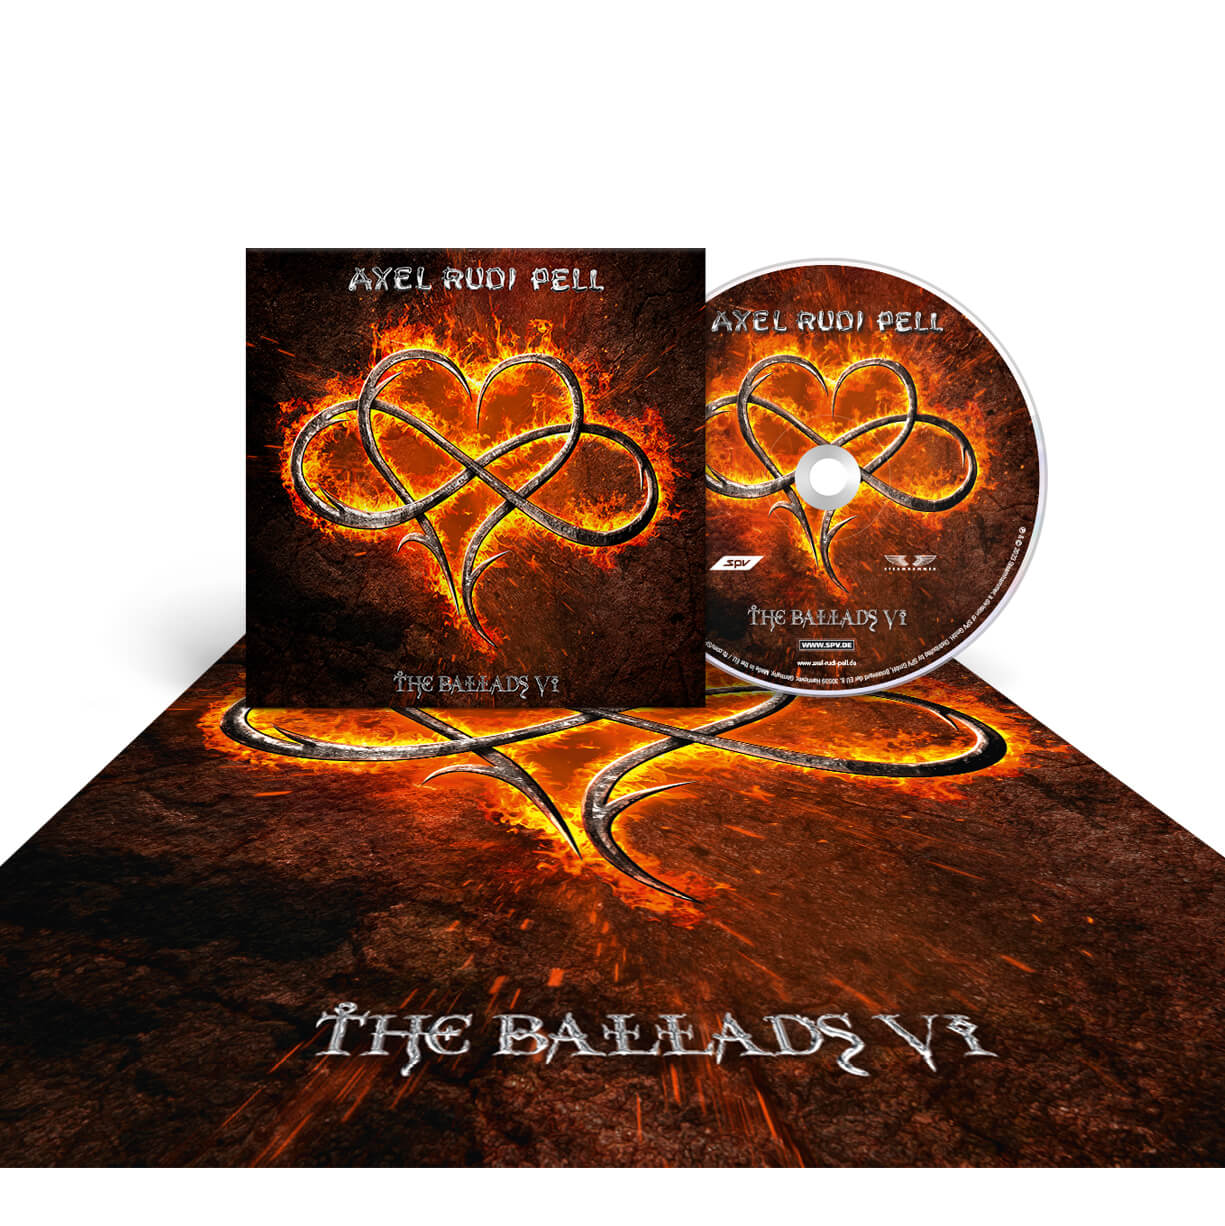 Axel Rudi Pell "The Ballads VI" CD